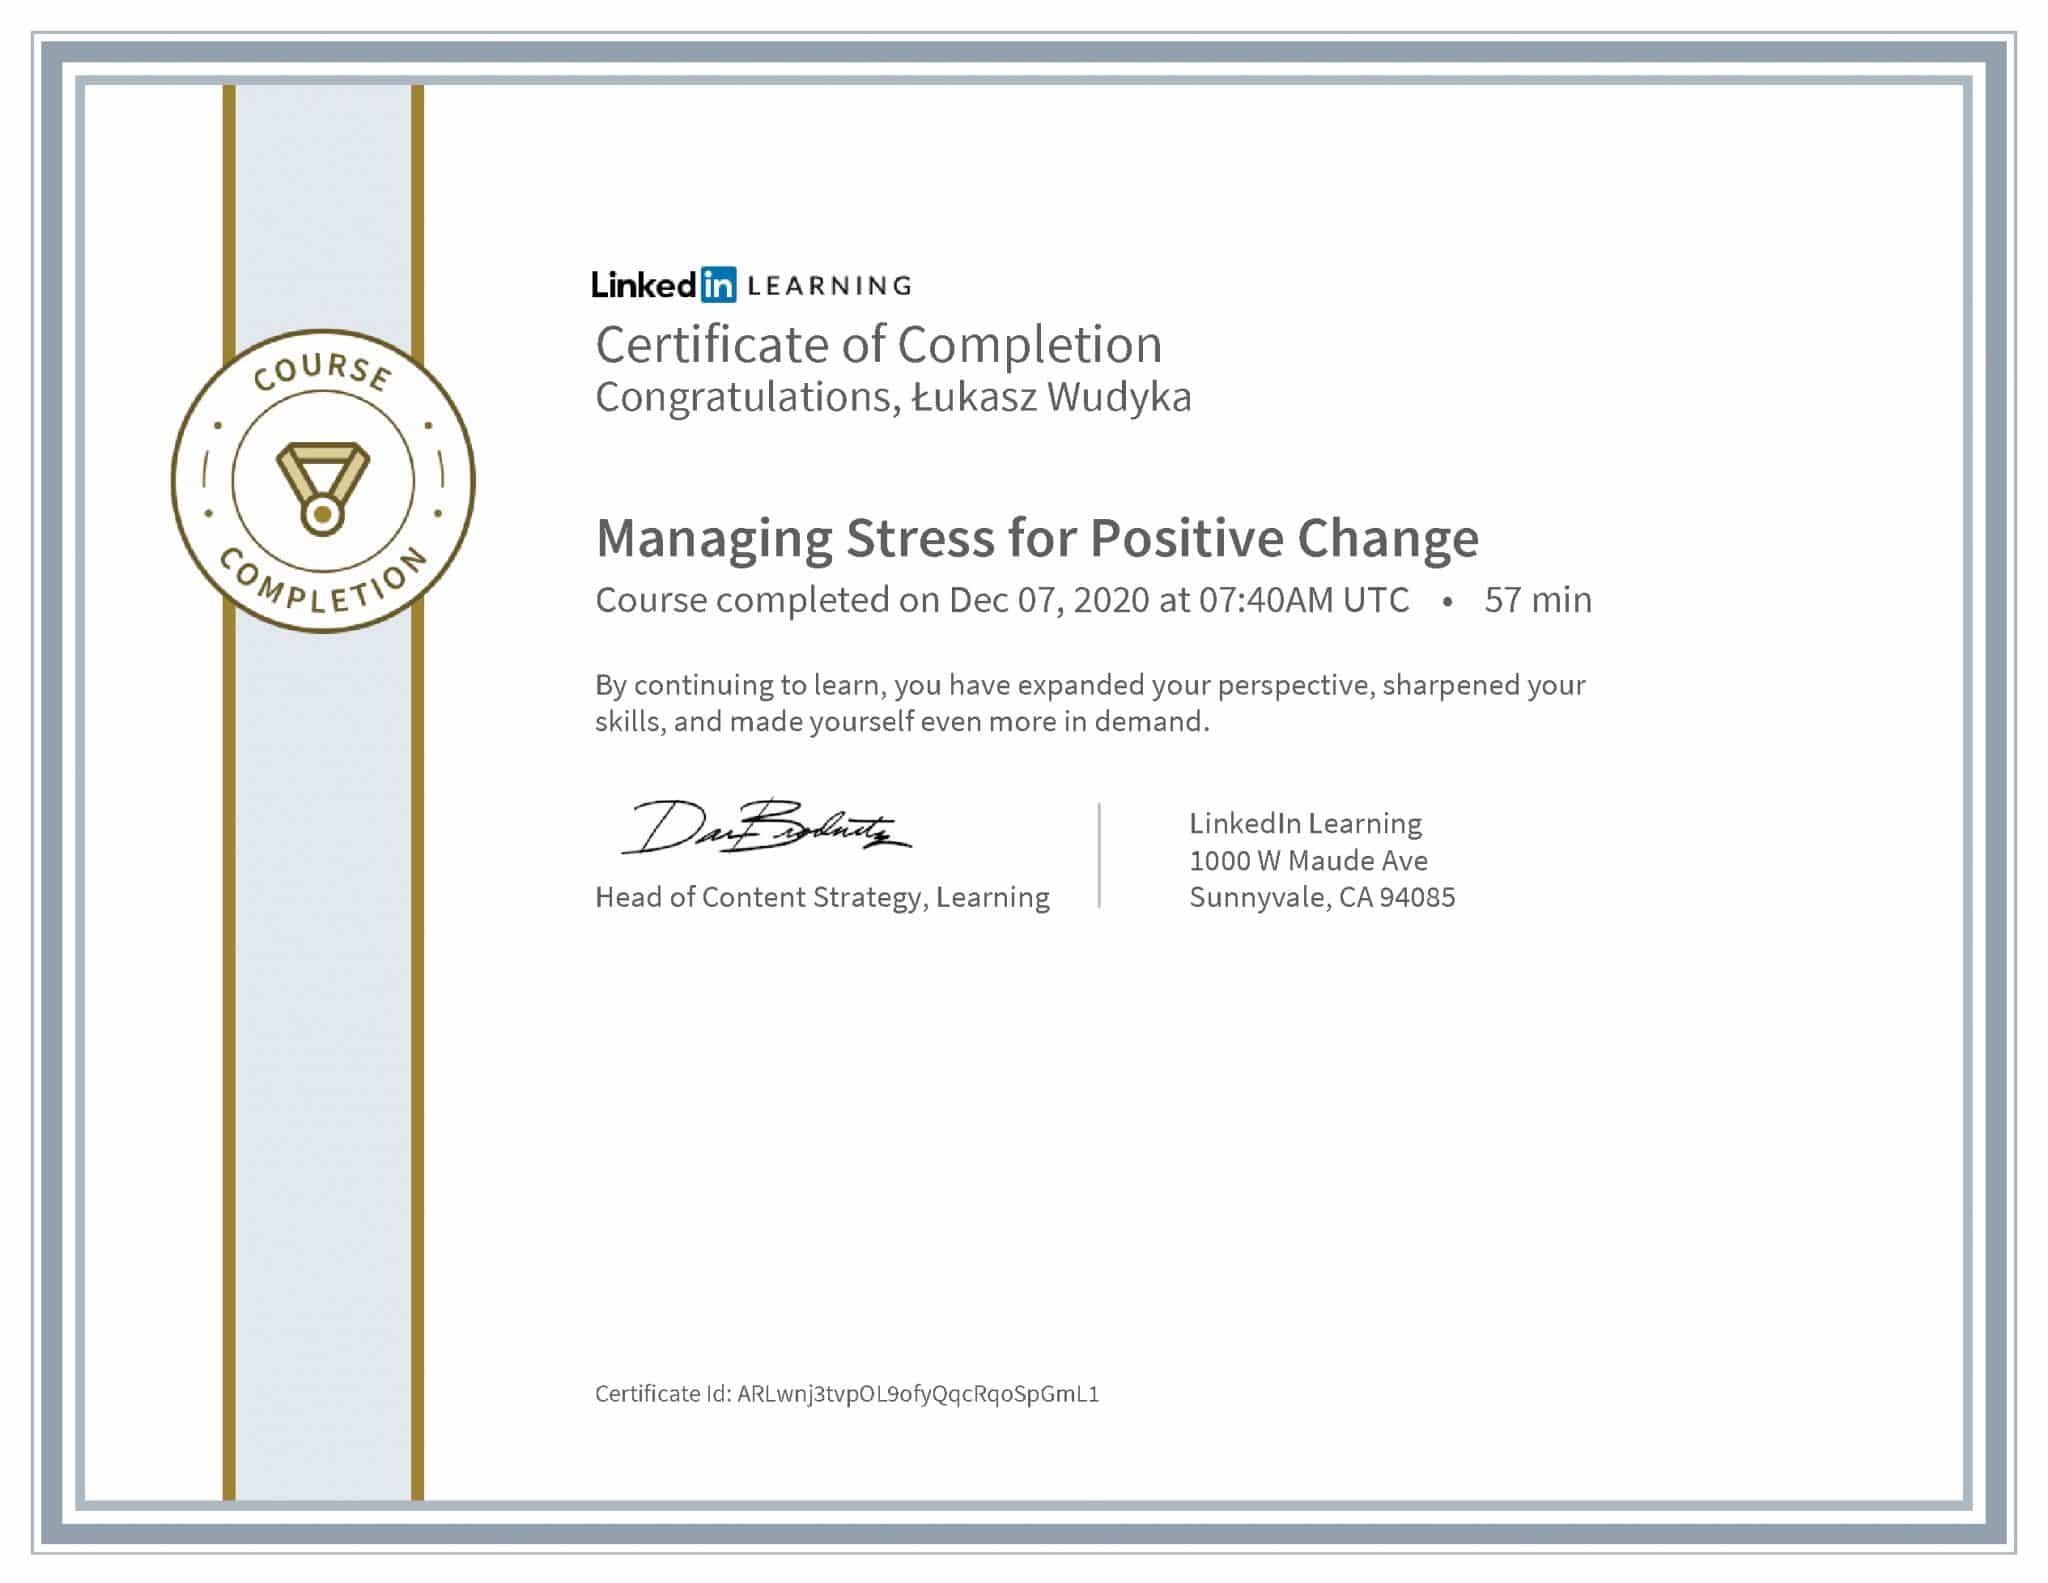 Łukasz Wudyka certyfikat LinkedIn Managing Stress for Positive Change